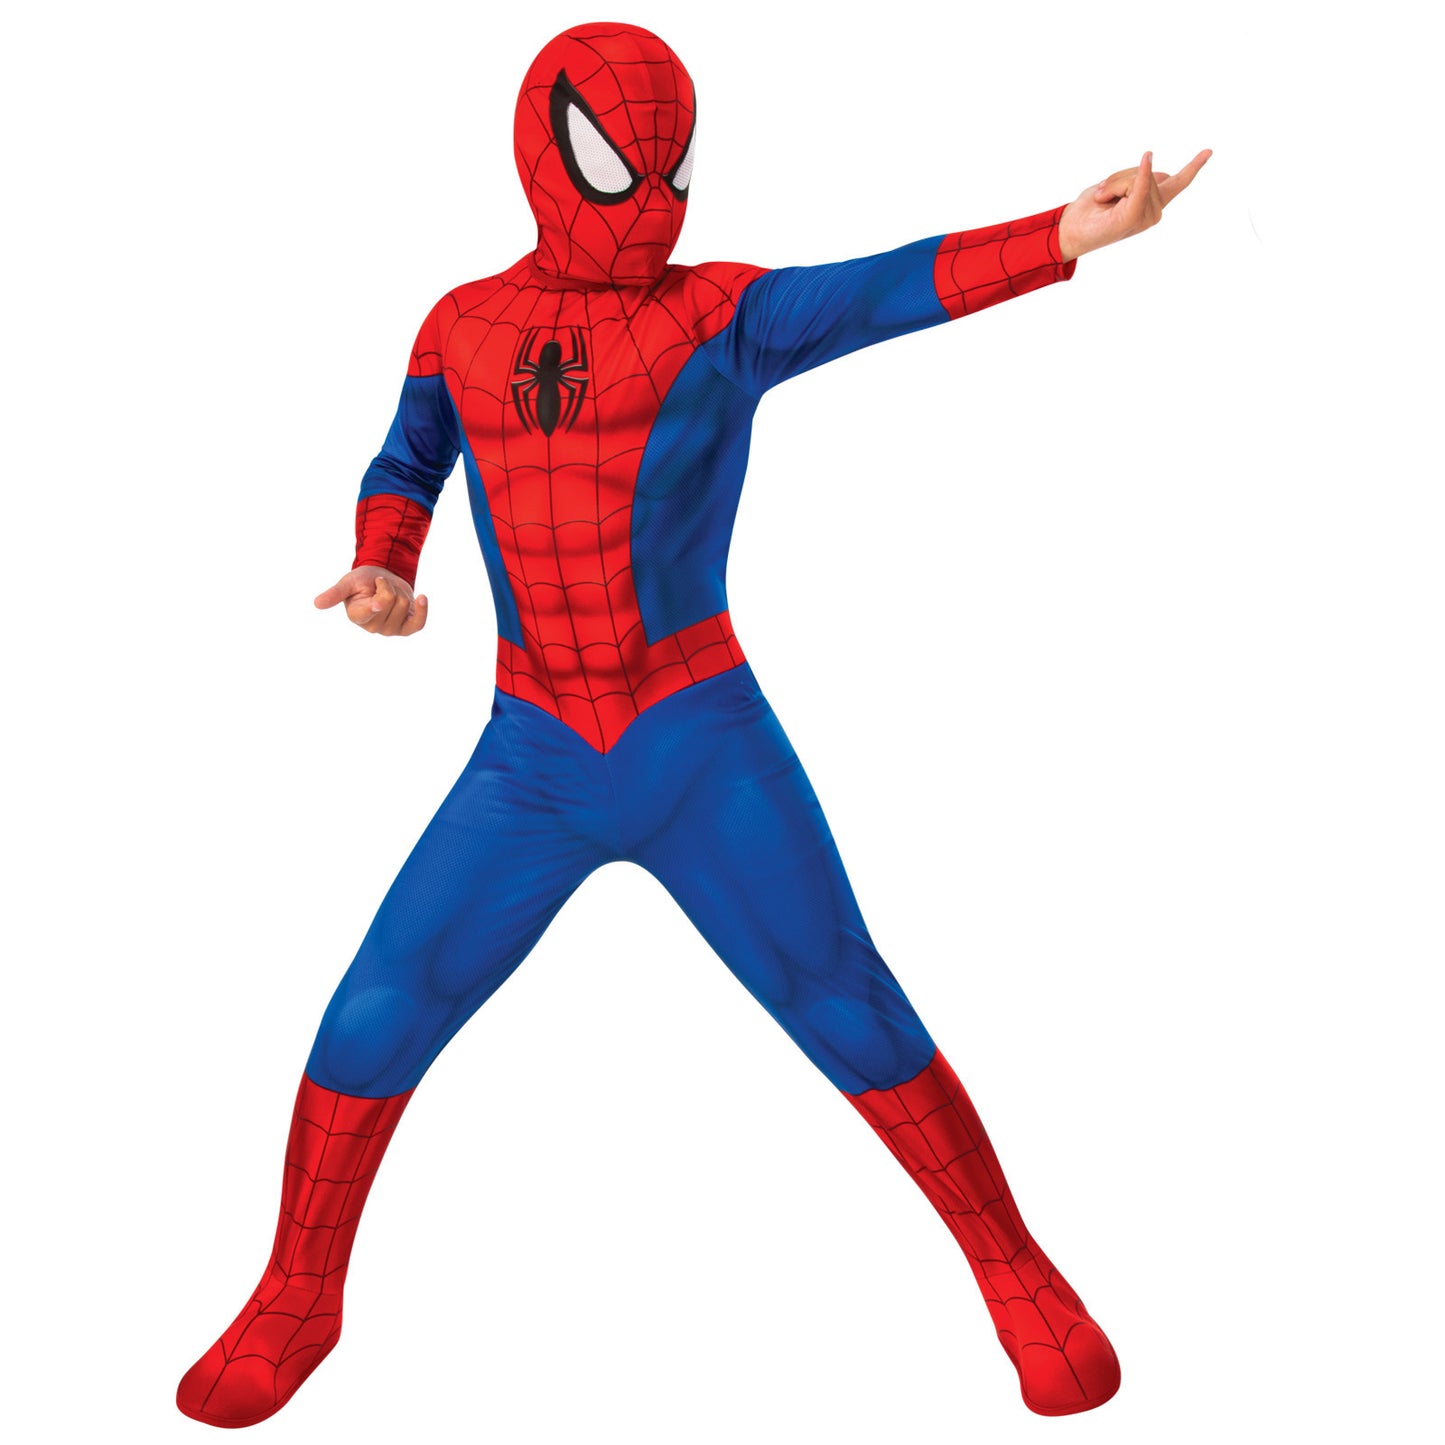 Spiderman Classic Boys Child Costume